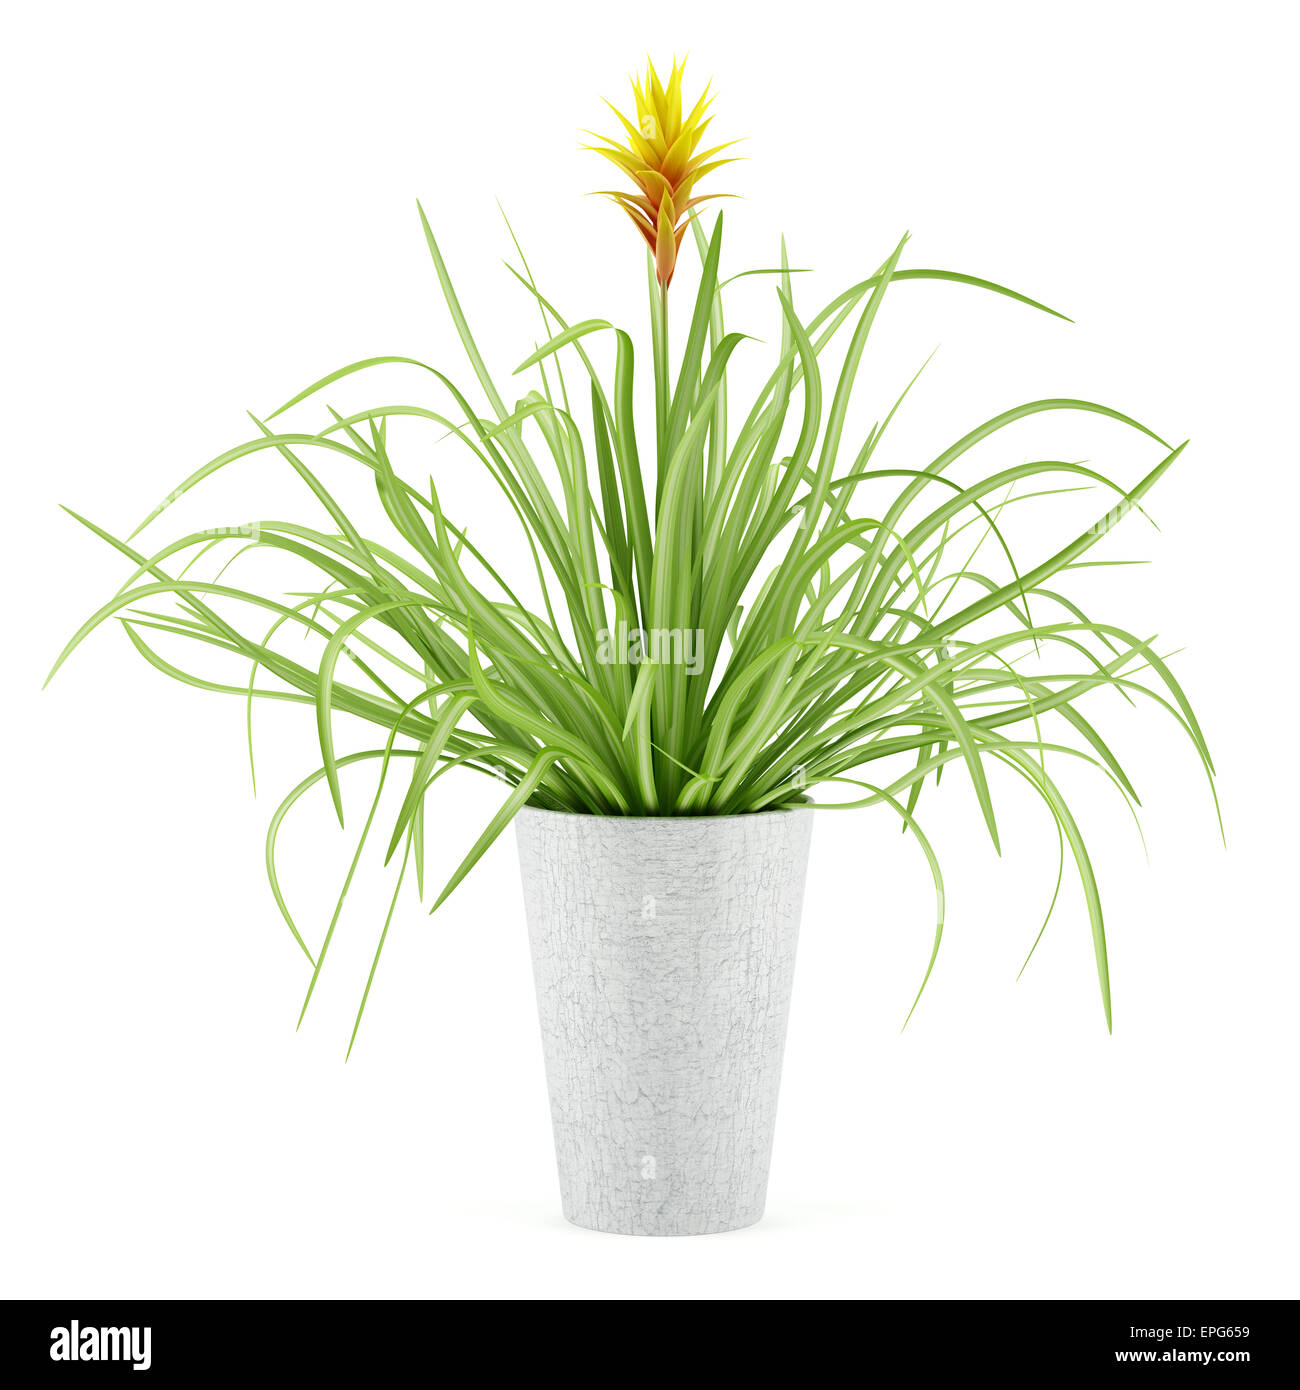 guzmania plant in pot isolated on white background Stock Photo